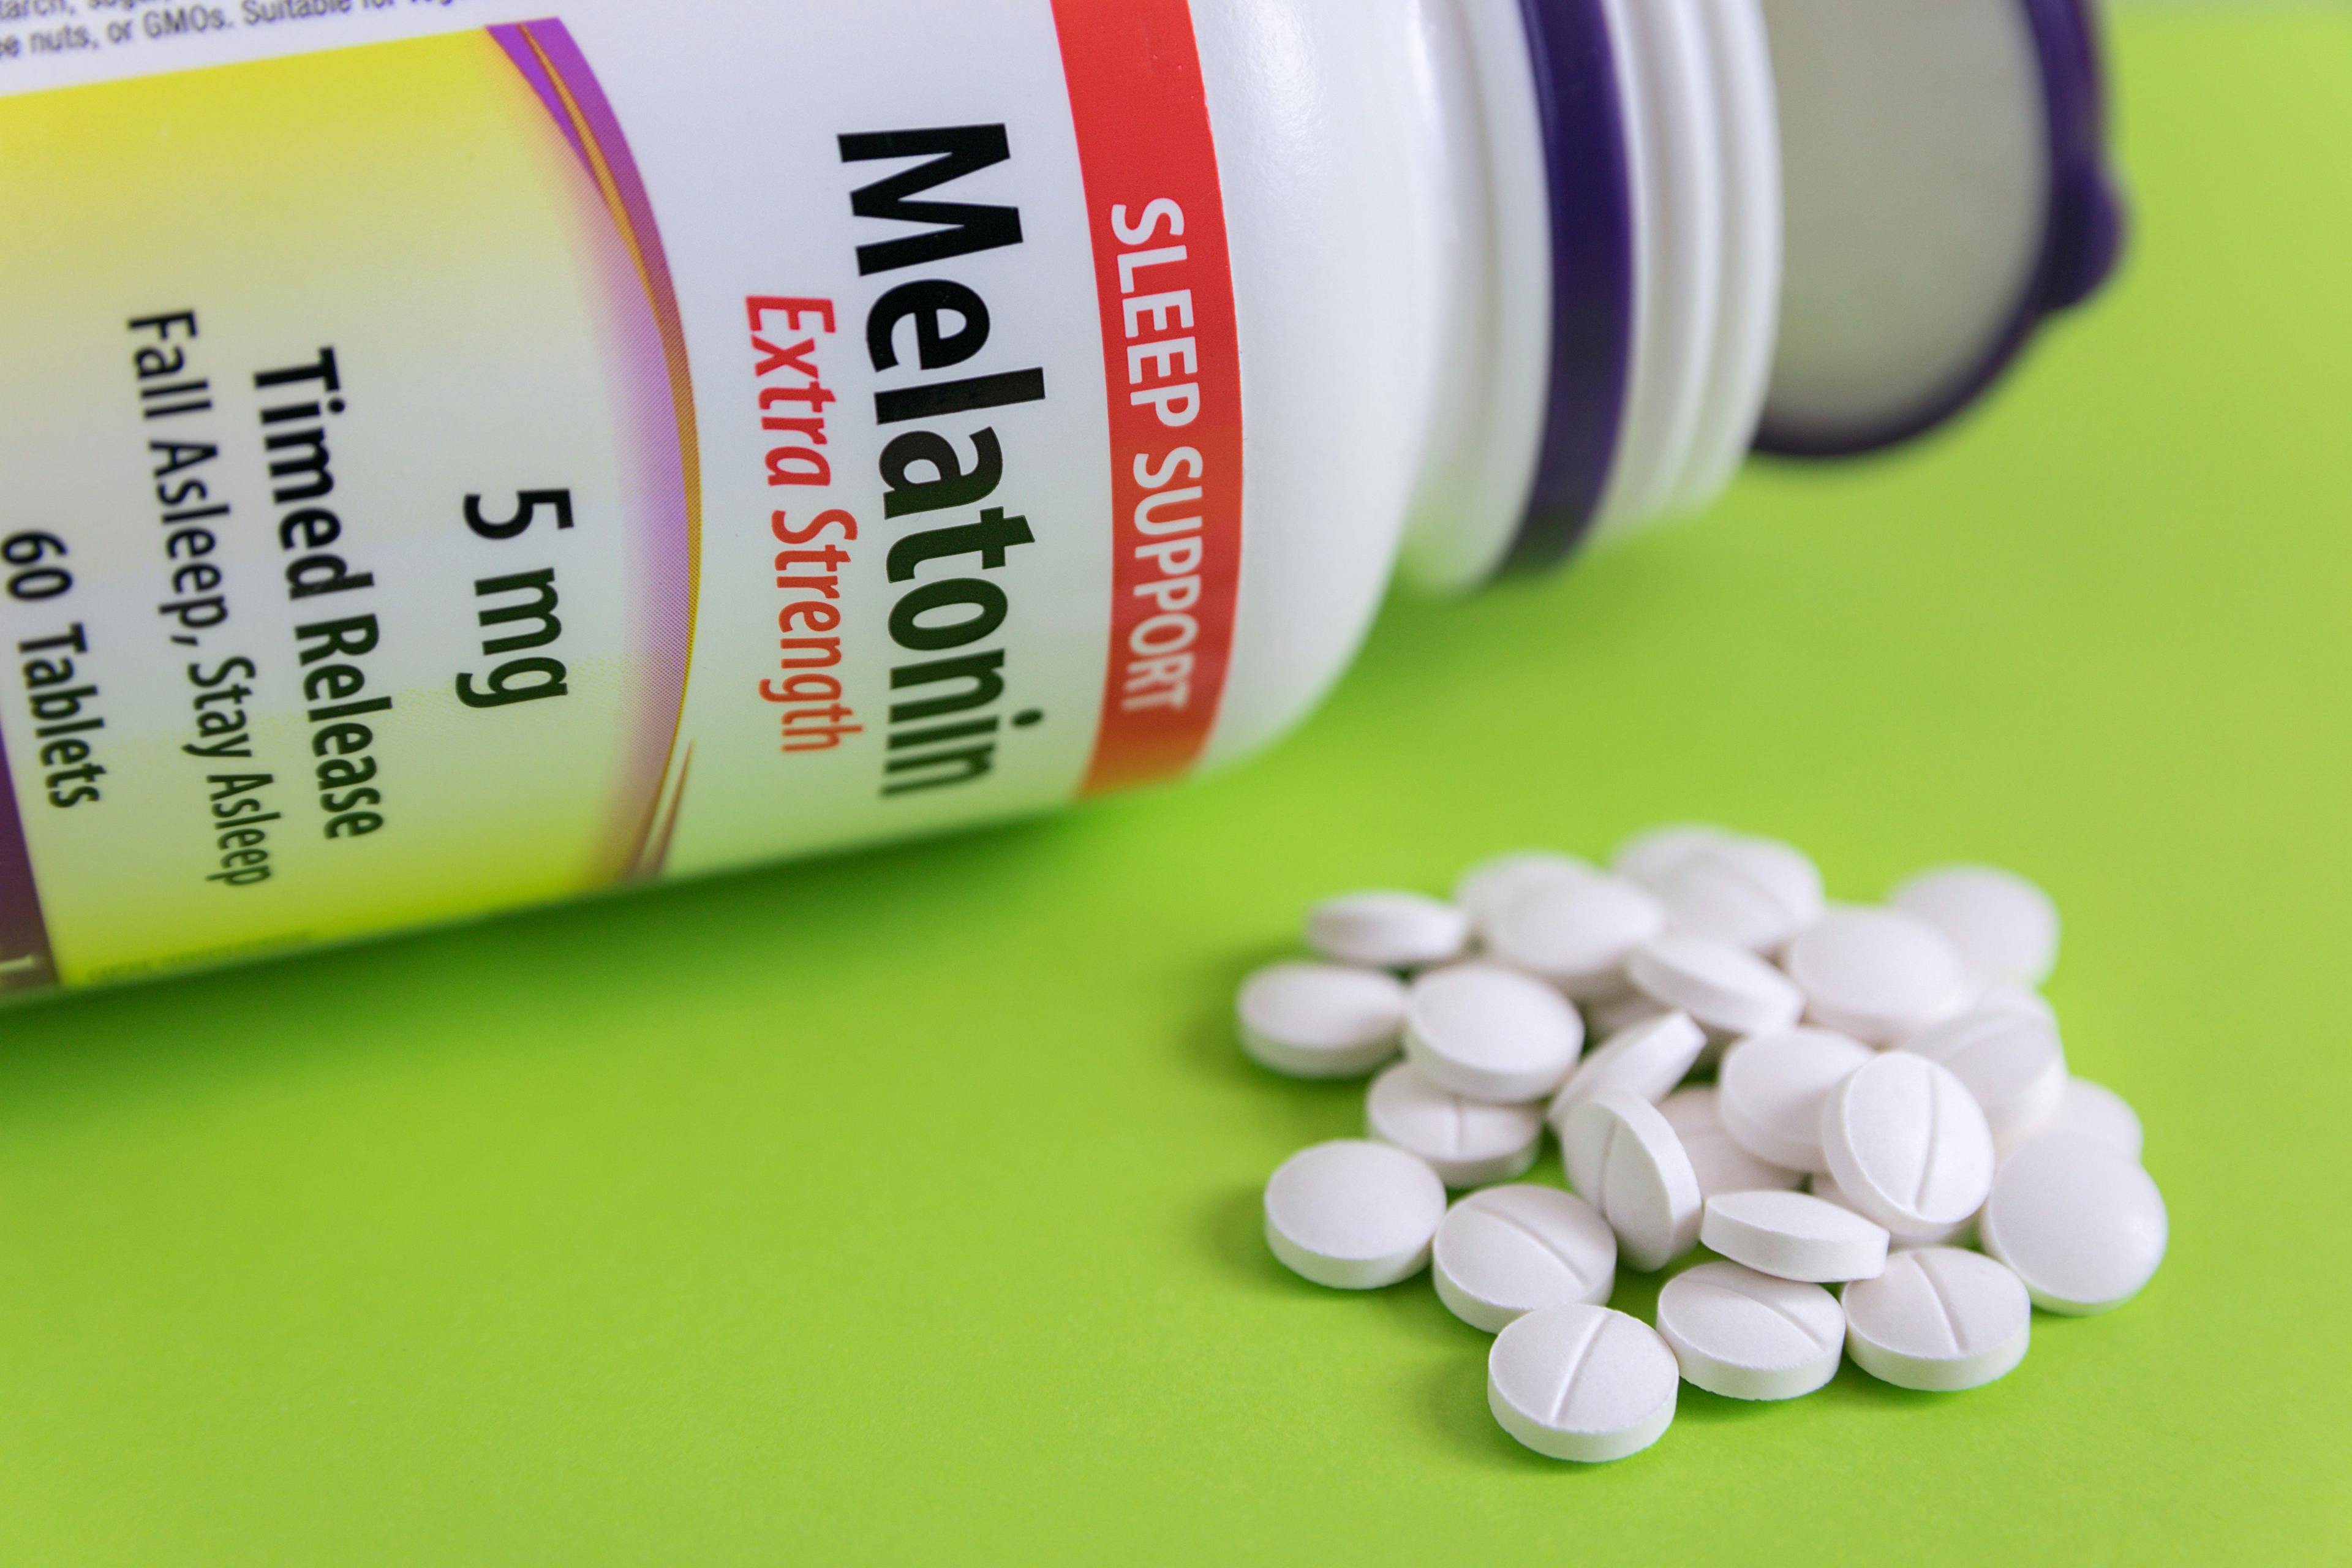 5mg melatonin pills on a green pastel surface | Image credit: Tihana - stock.adobe.com